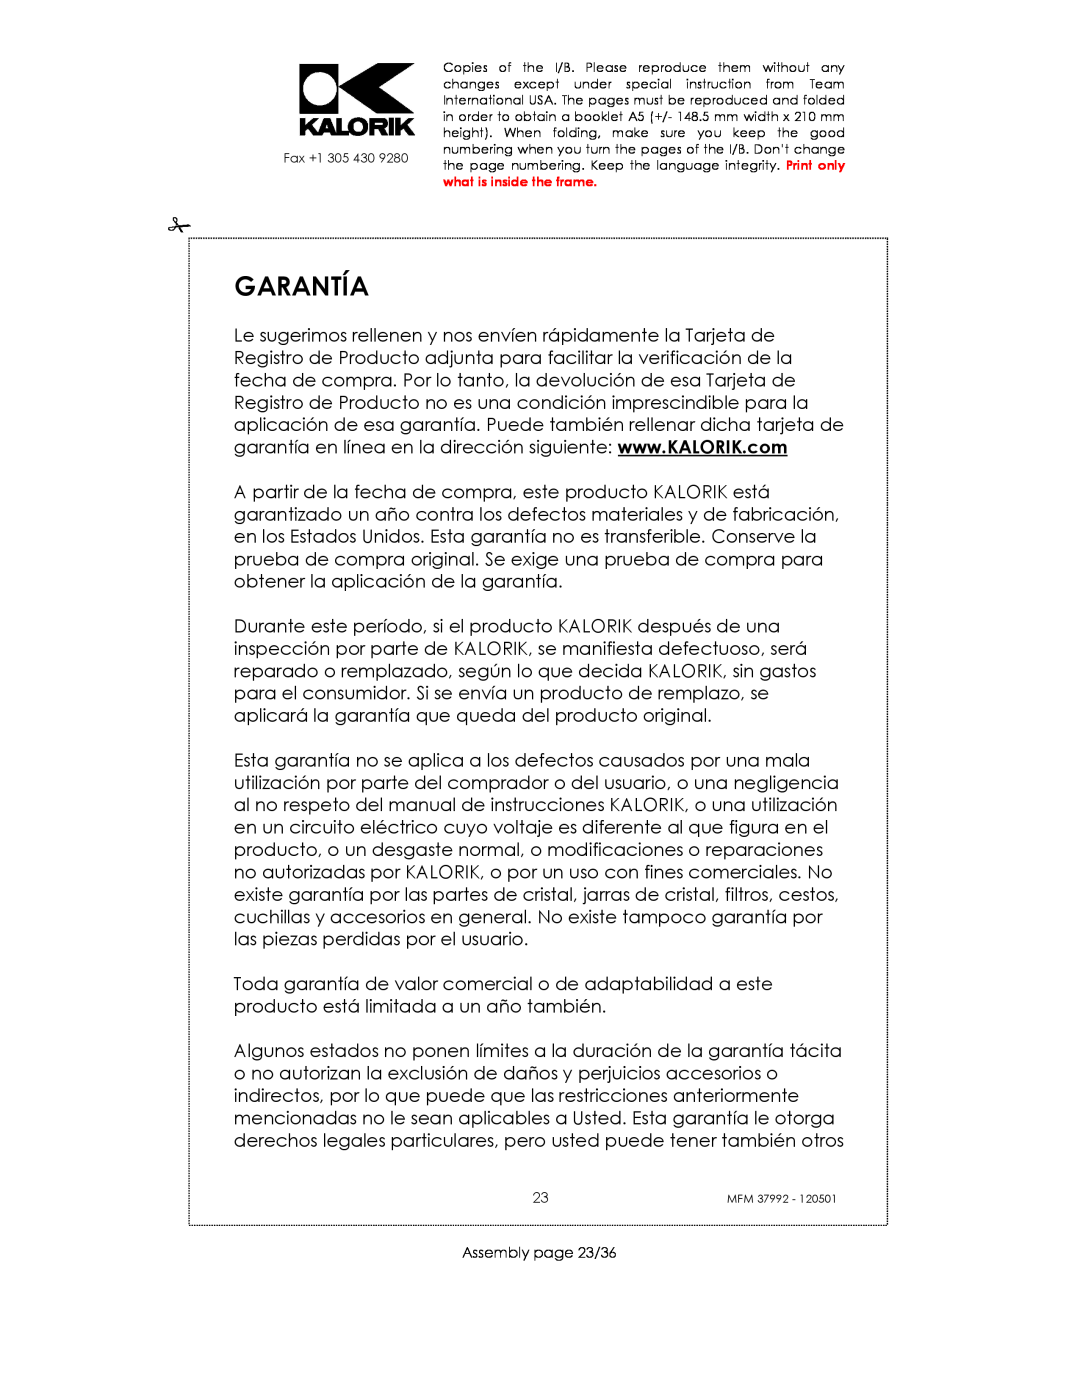 Kalorik MFM 37992 manual Garantía, Assembly page 23/36 